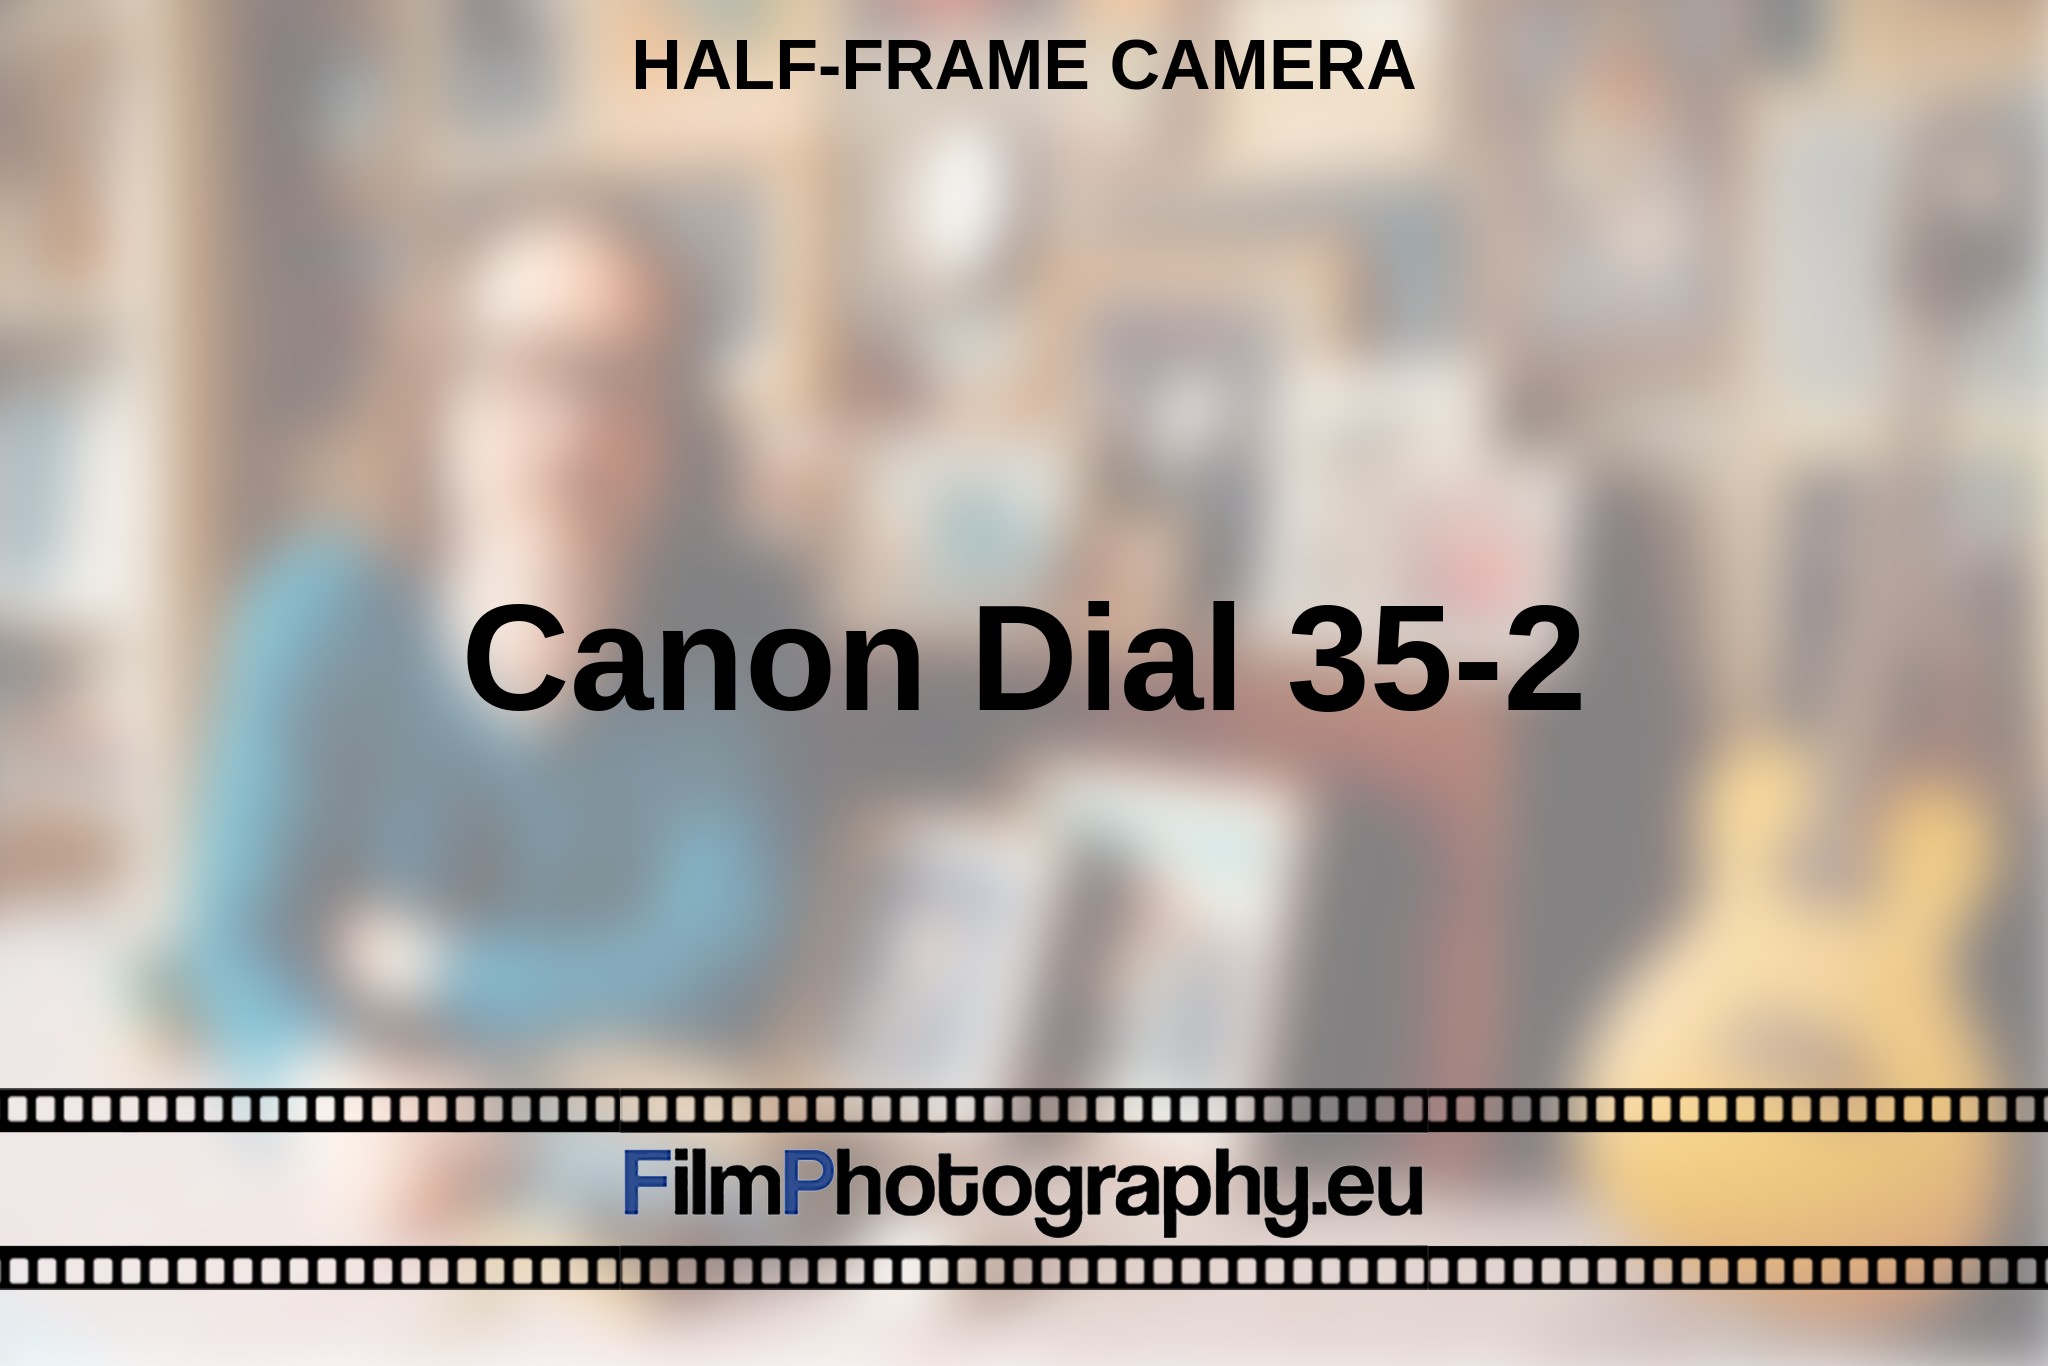 canon-dial-35-2-half-frame-camera-en-bnv.jpg